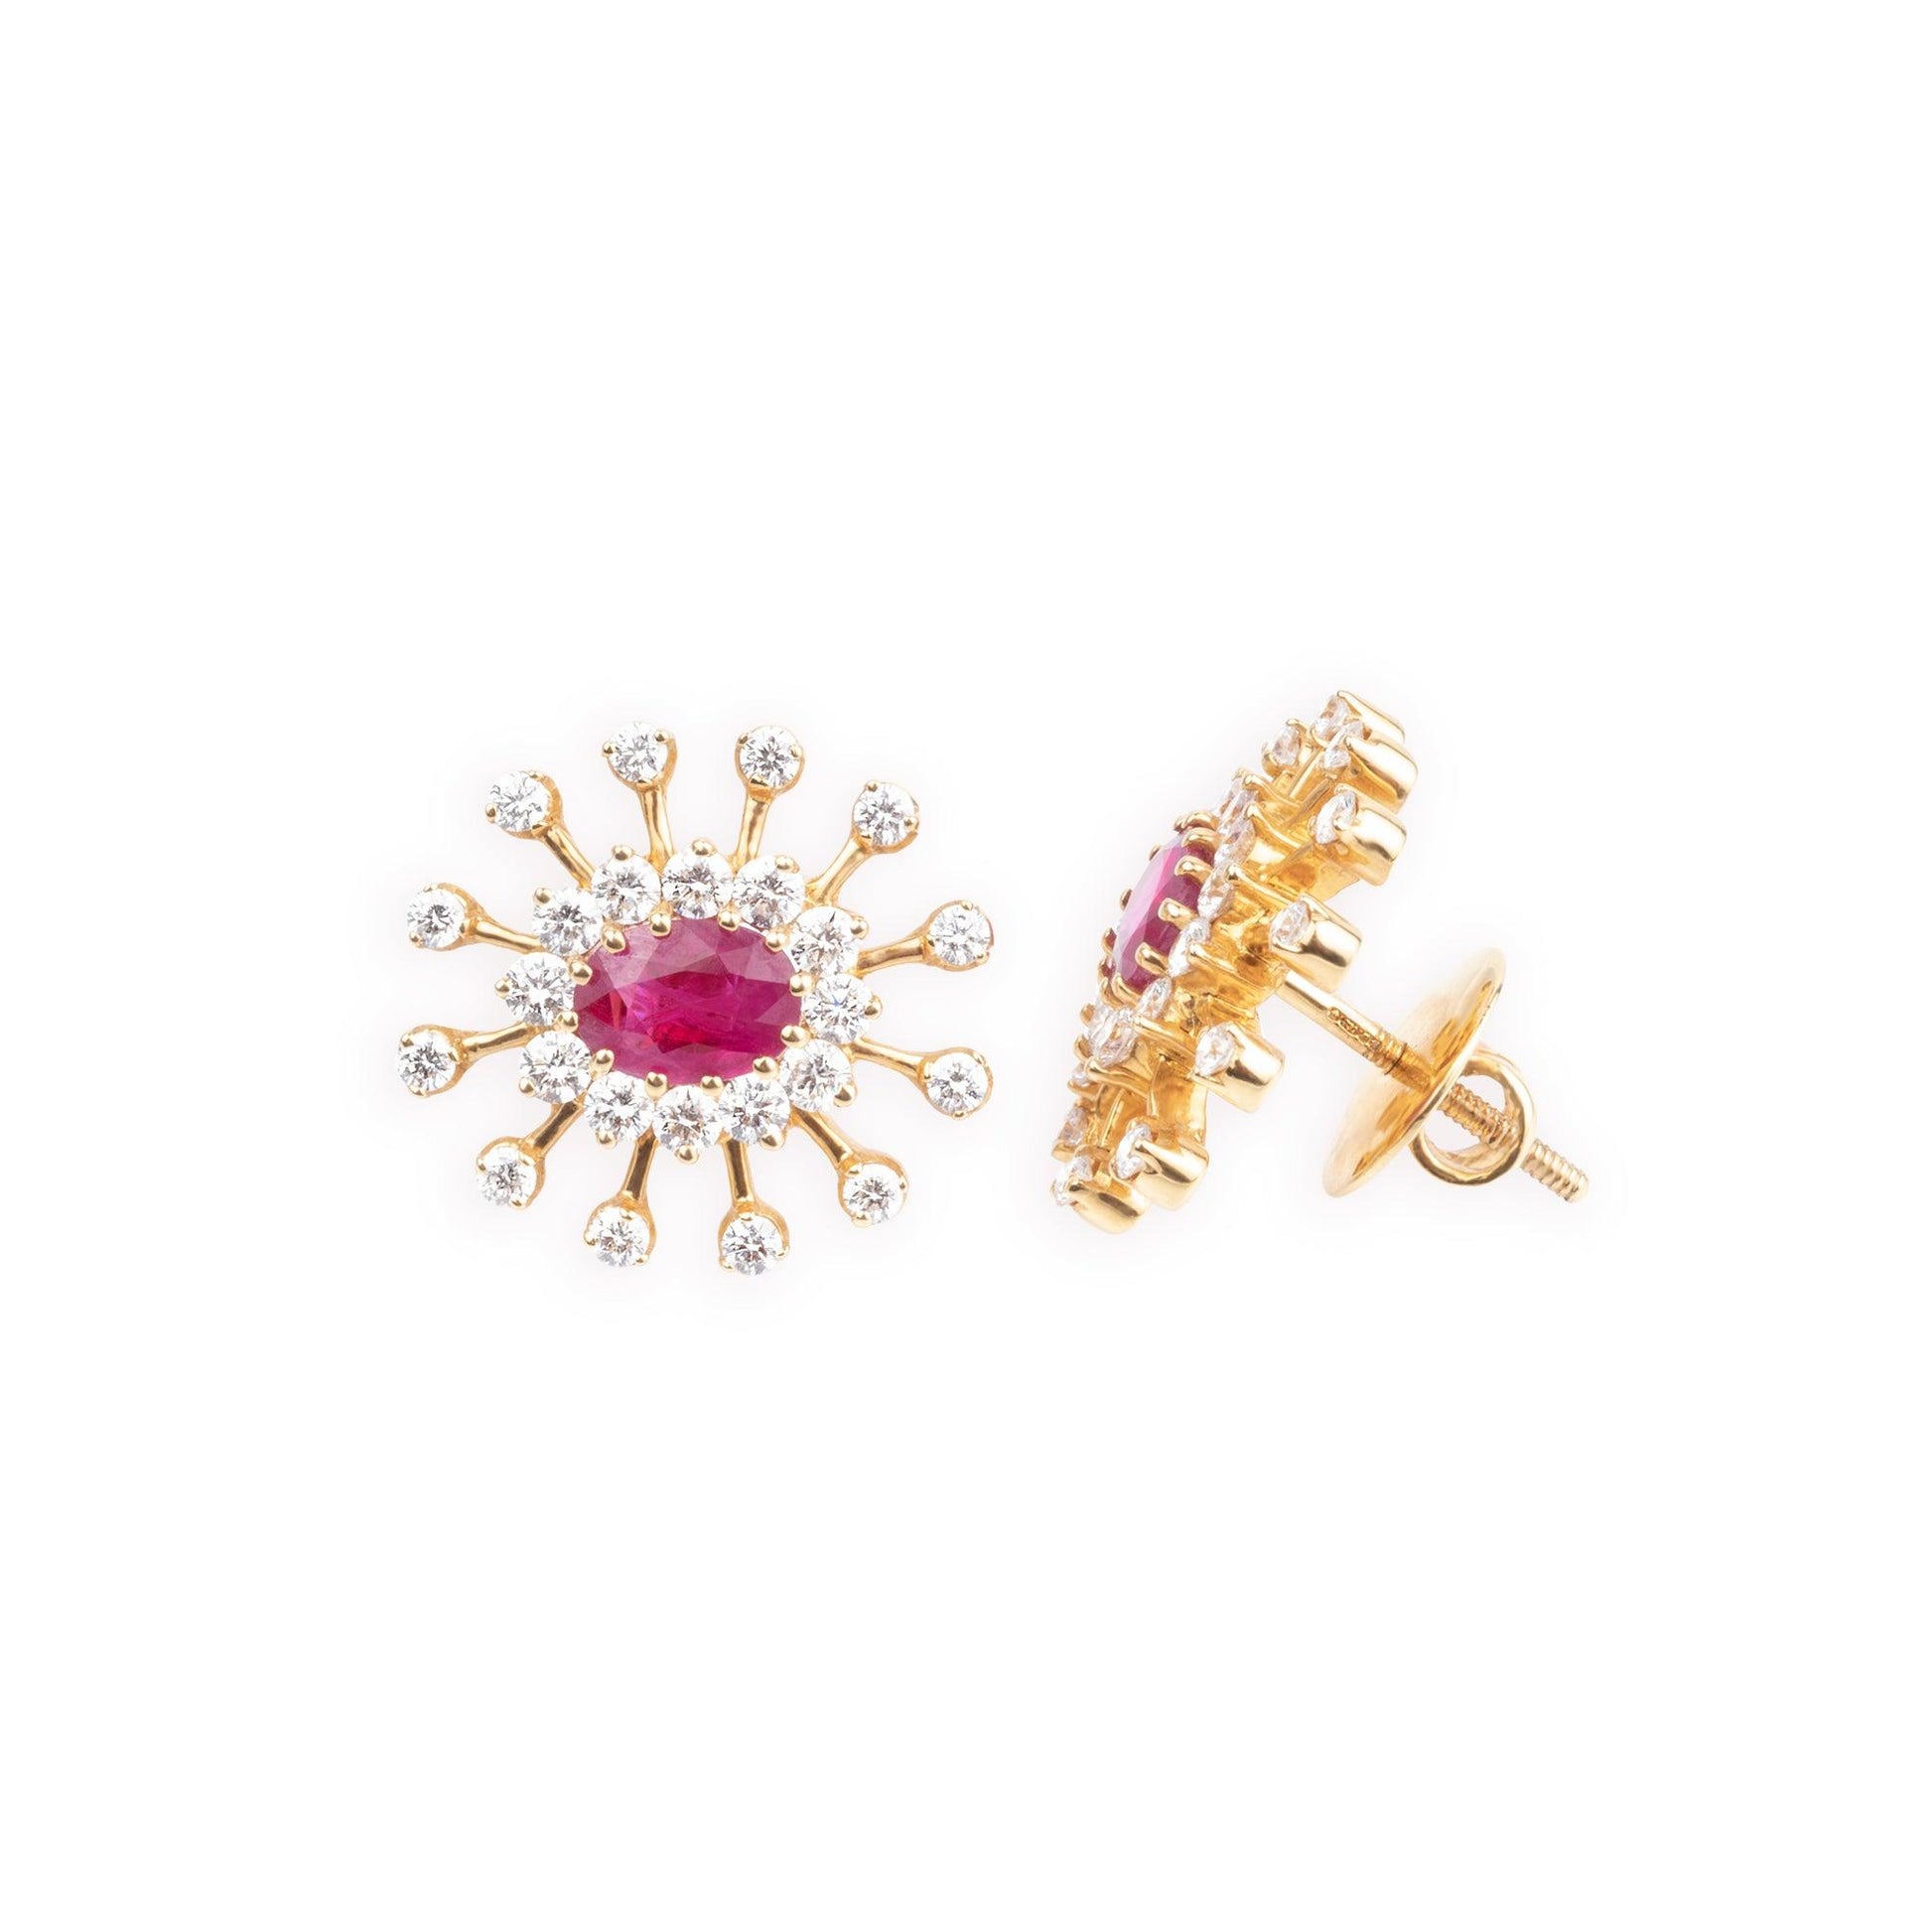 18ct Yellow Gold Diamond & Ruby Earrings E-4419 - Minar Jewellers